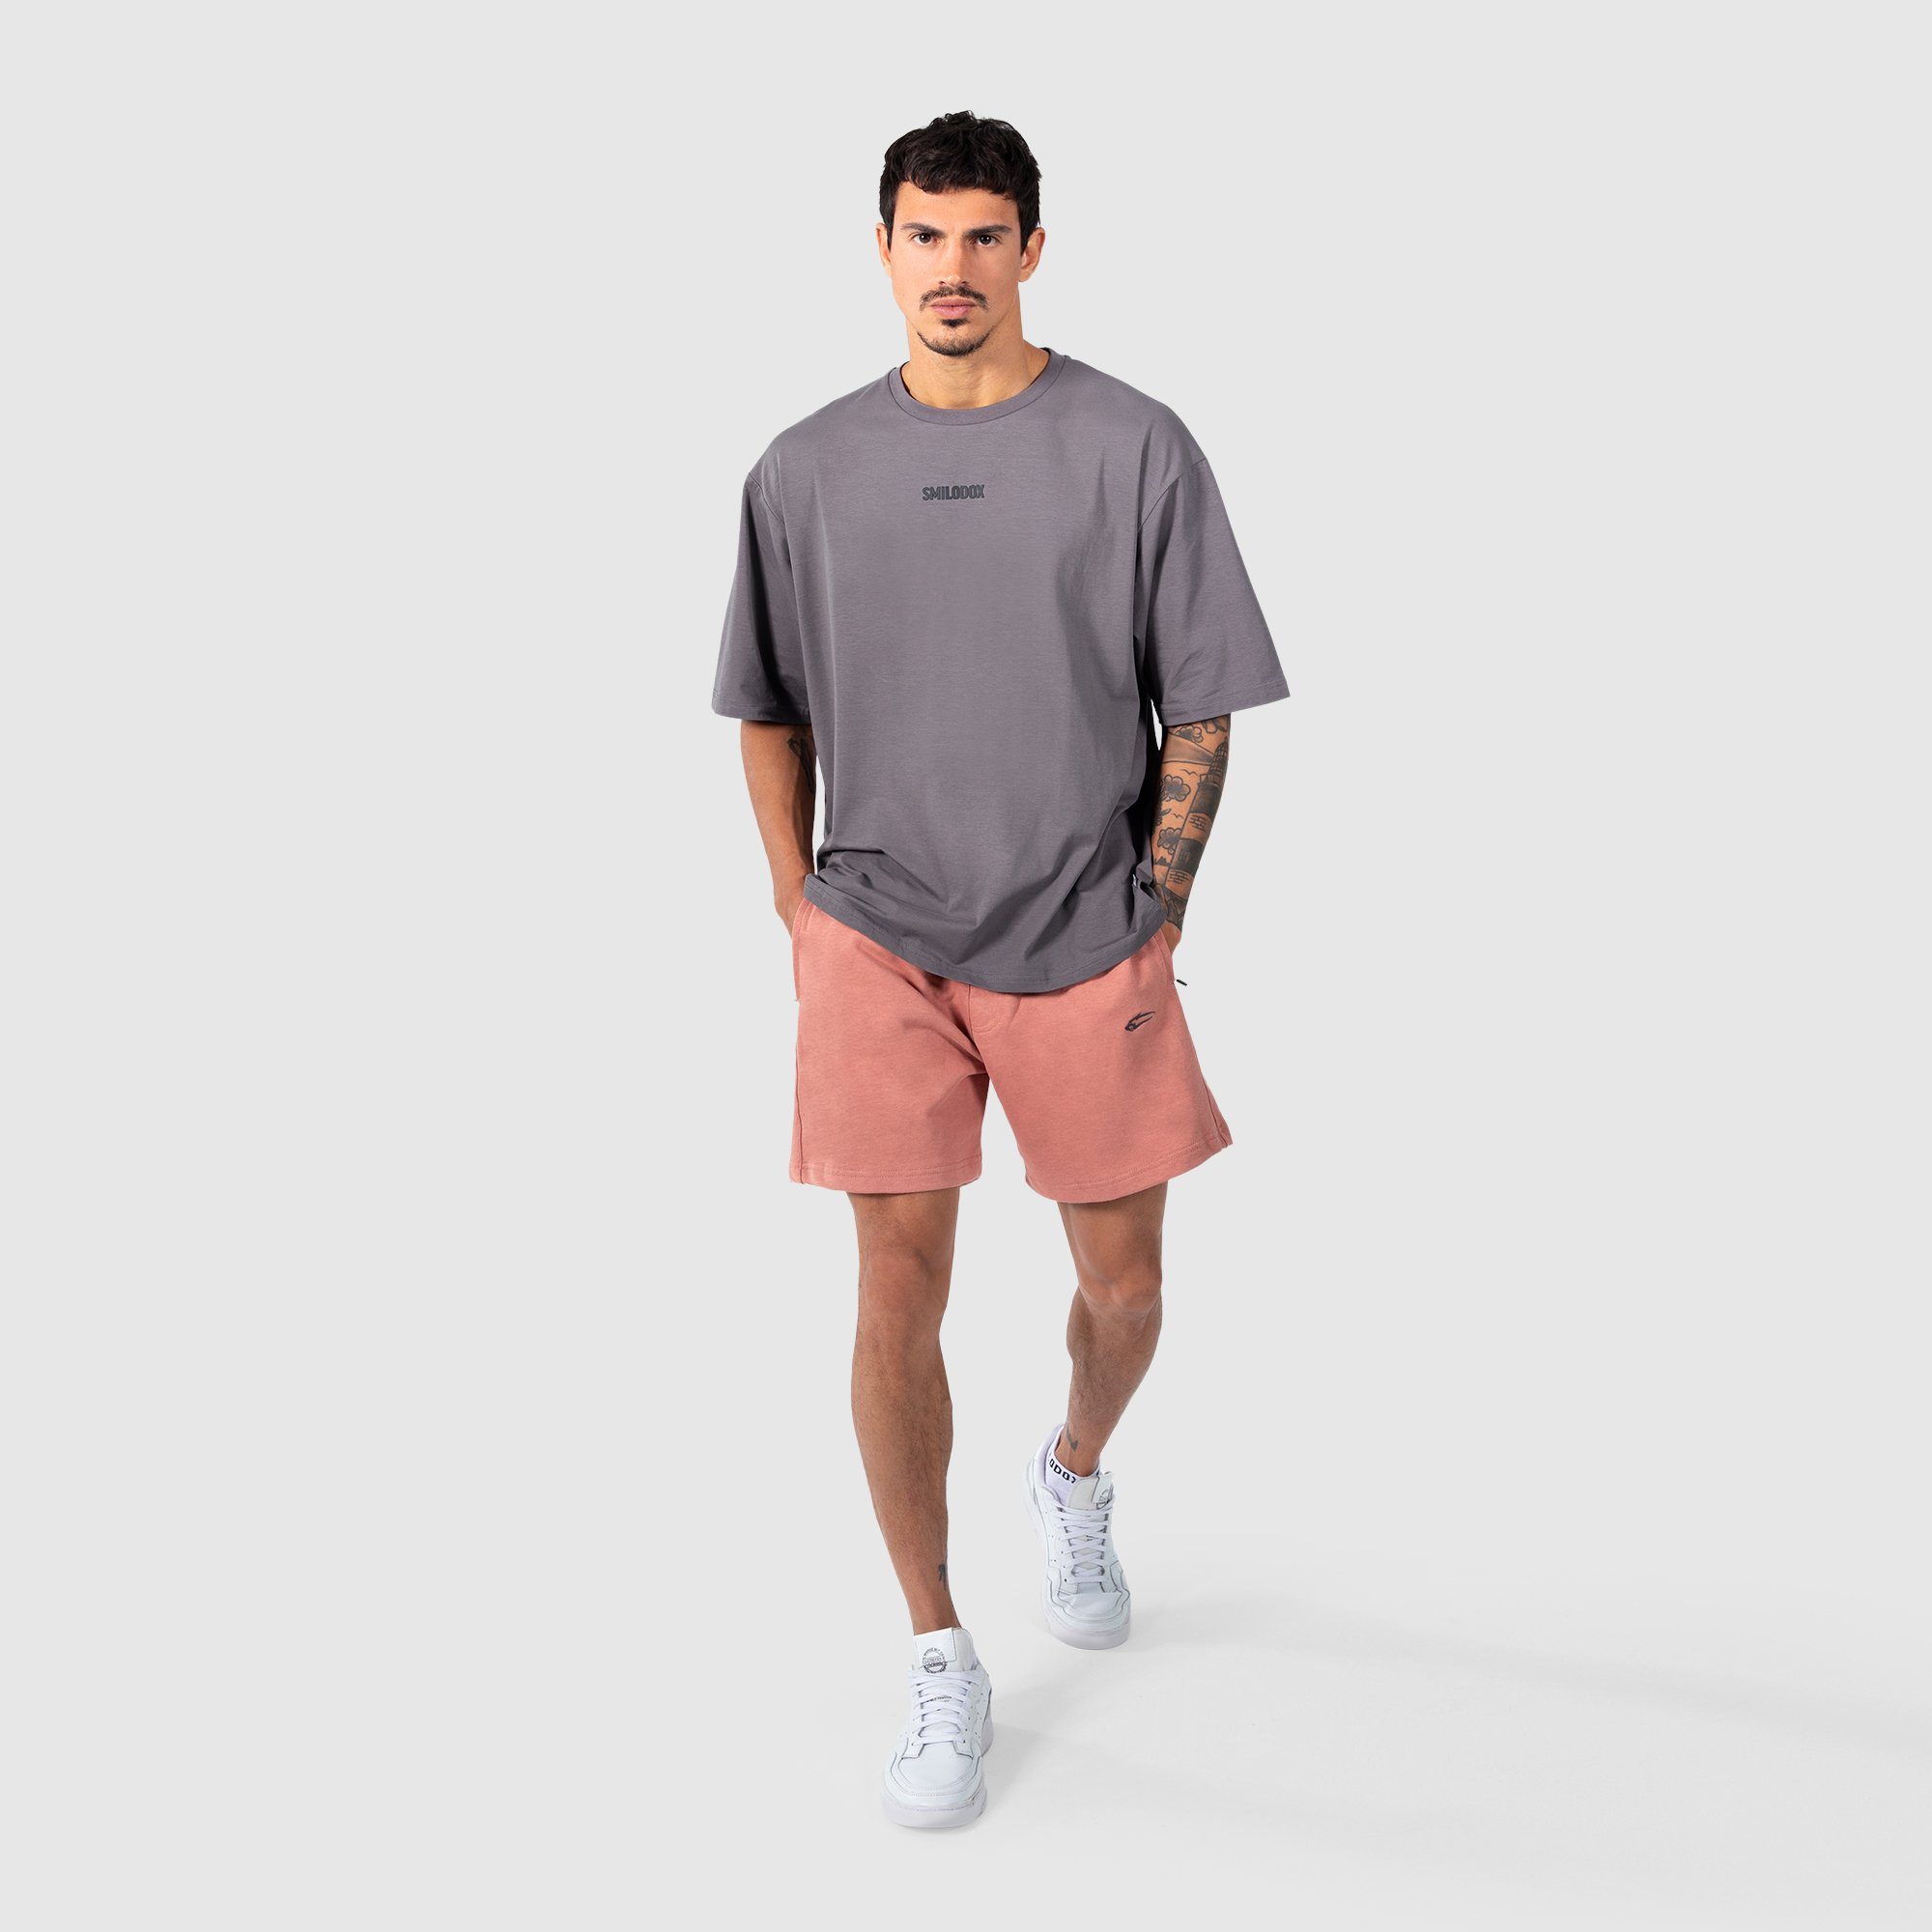 Off Time T-Shirt Oversize Grau Smilodox